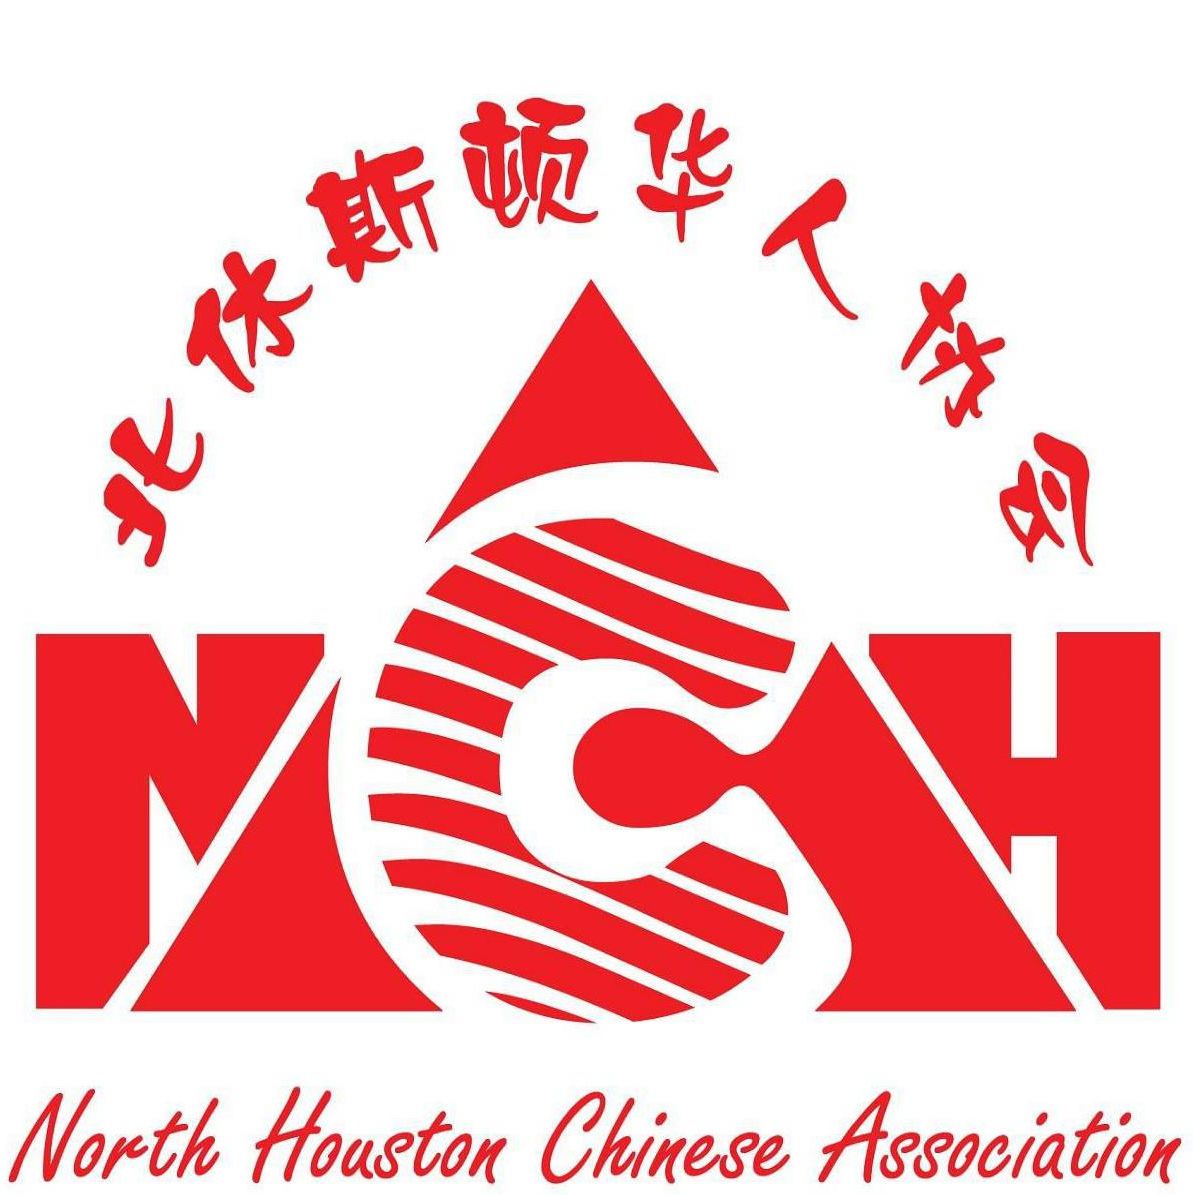 Mandarin Speaking Organization in Austin Texas - North Houston Chinese Association